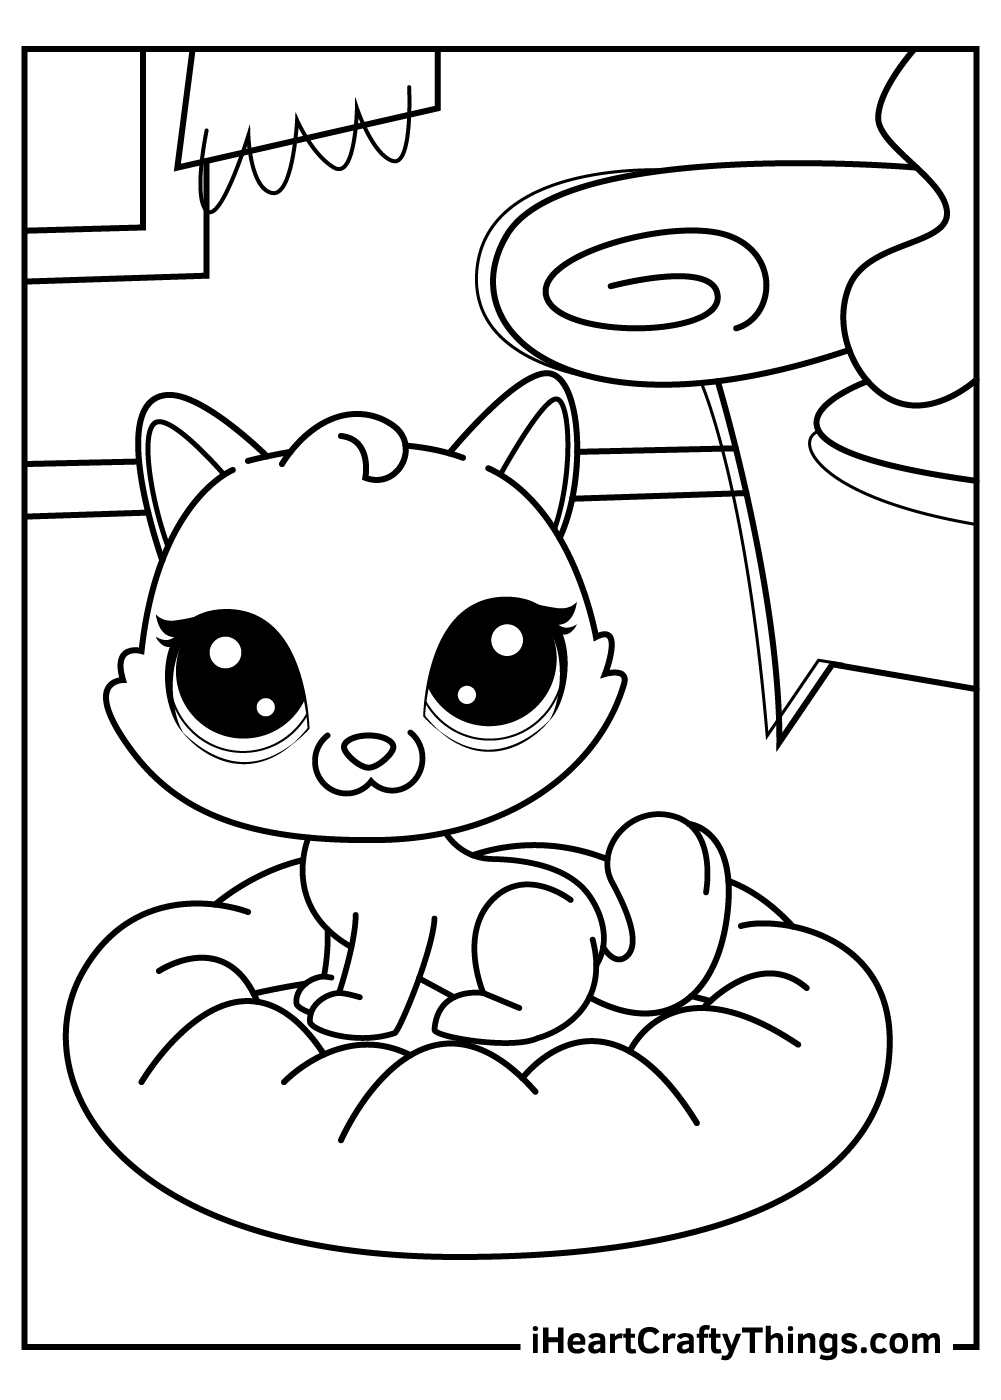 Littlest pet shop coloring pages free printables